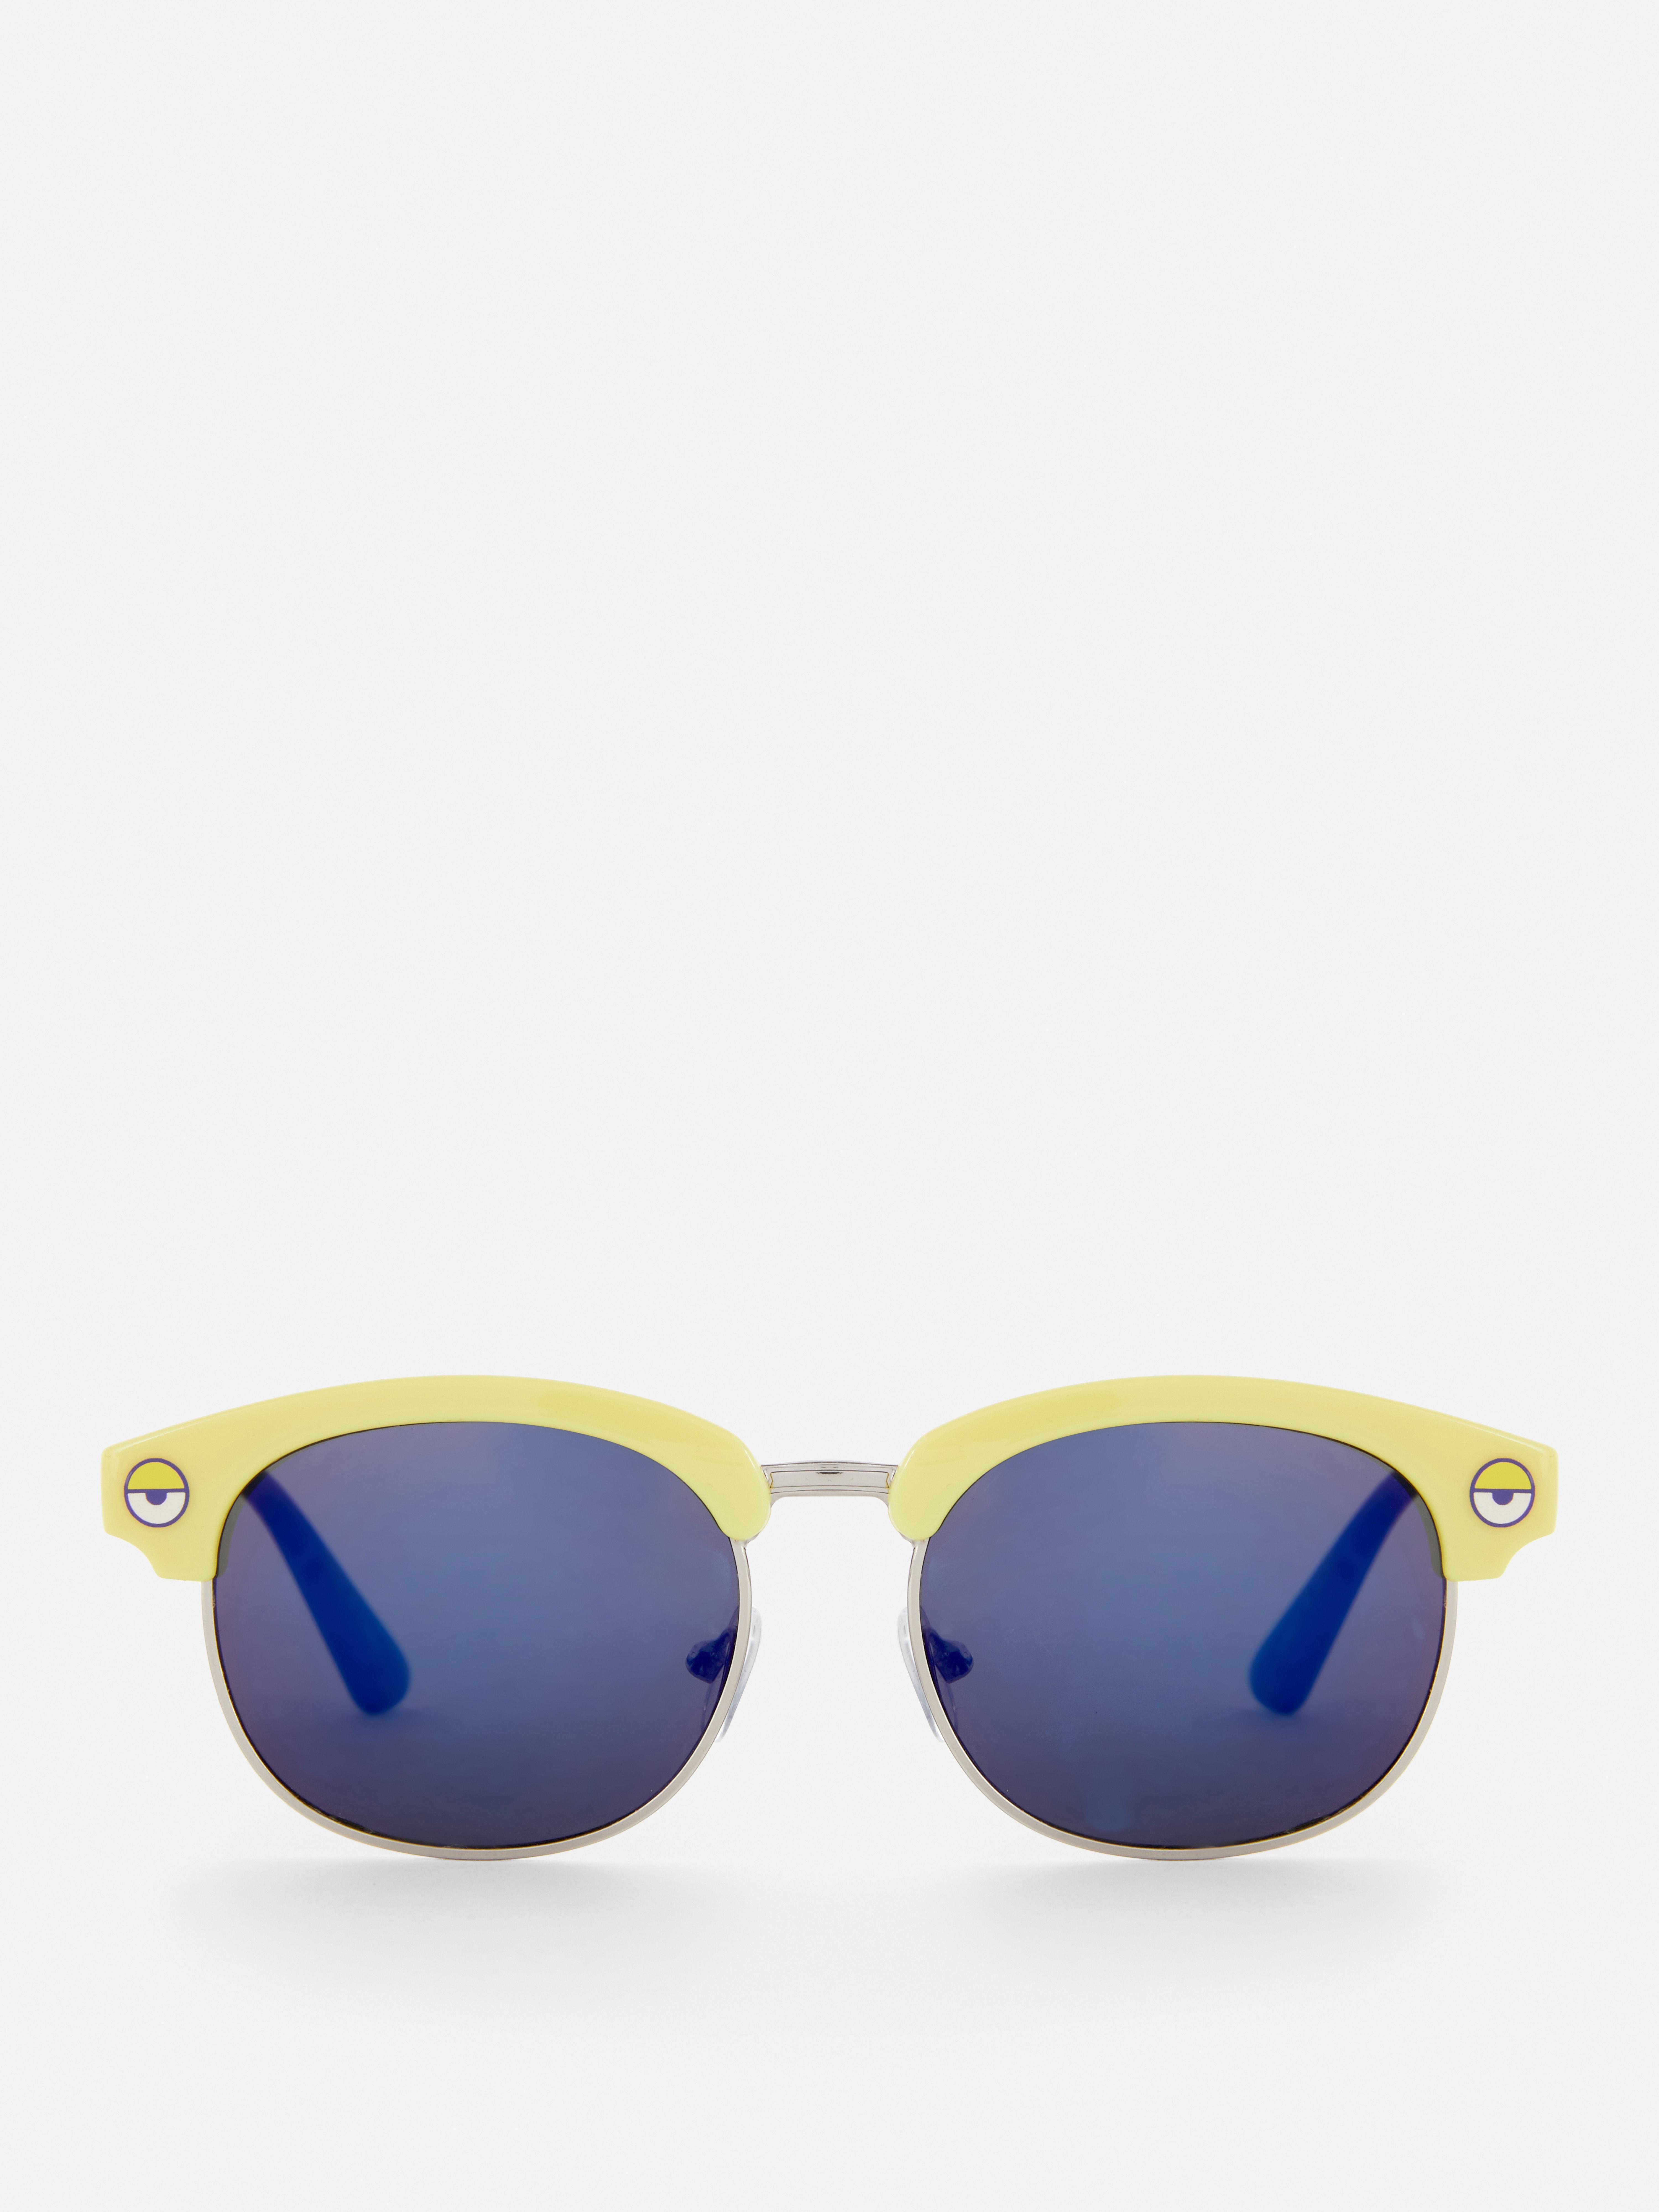 Minions Round Sunglasses